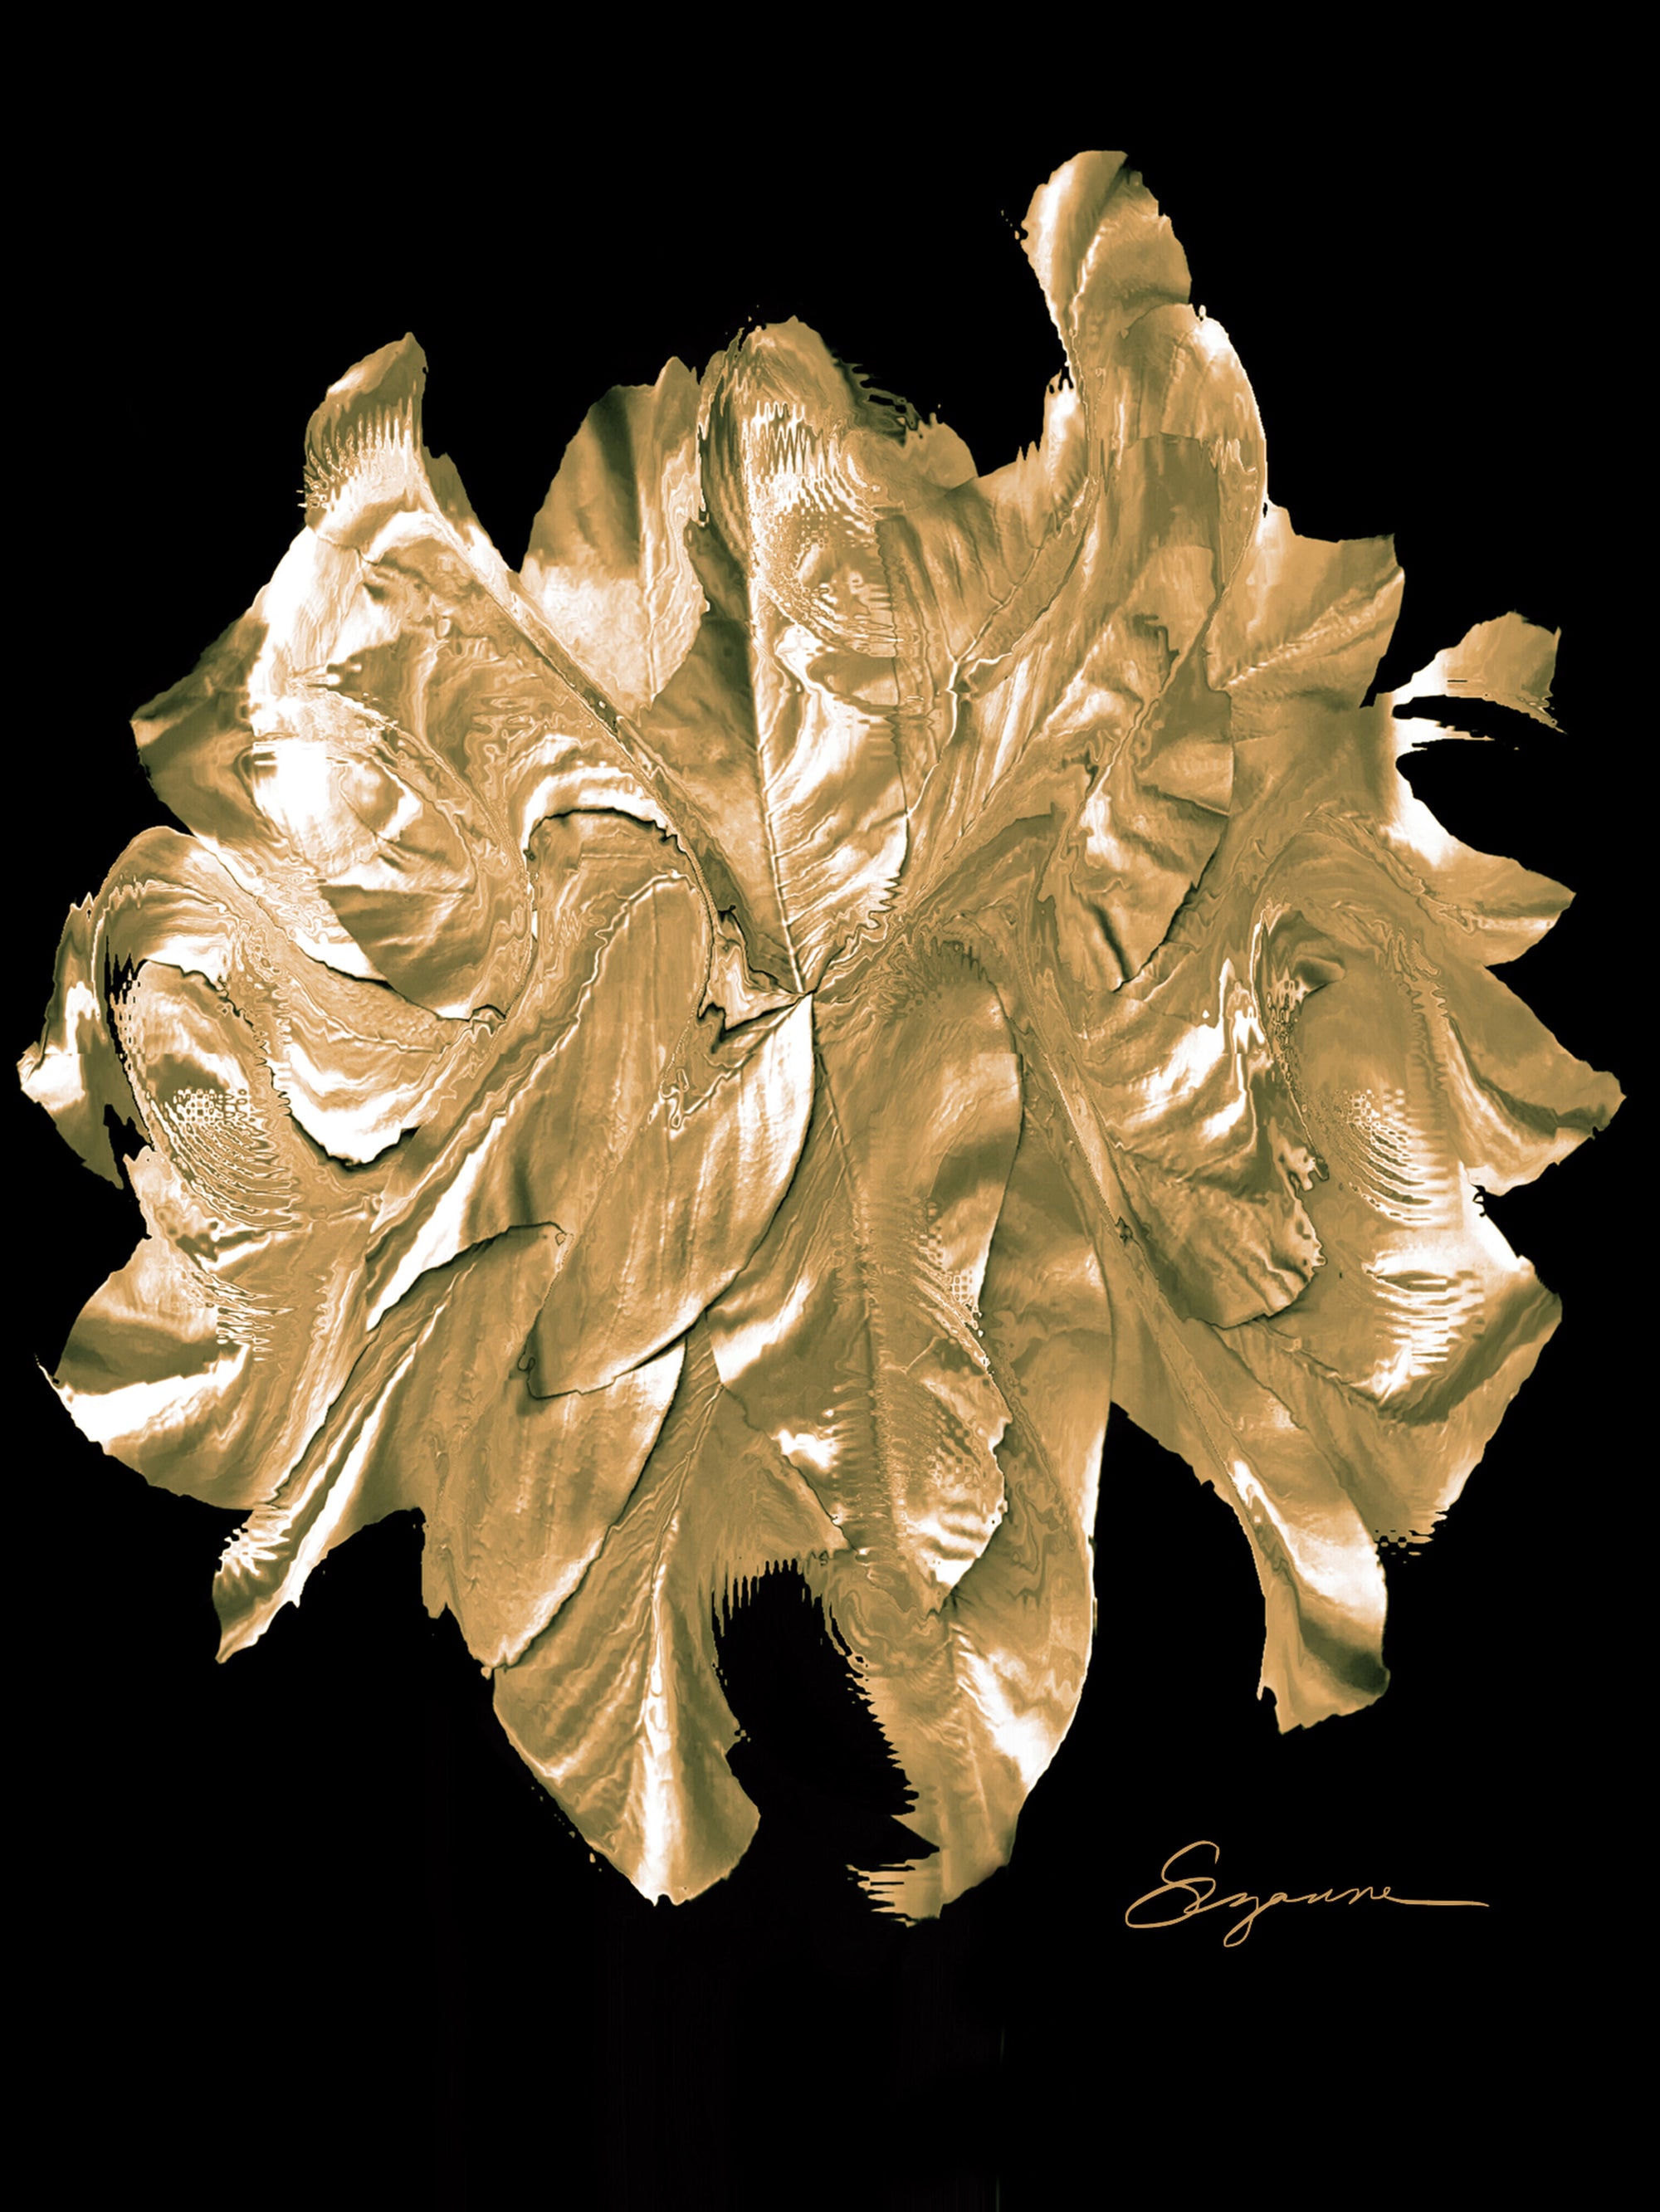 a golden flower on a black background